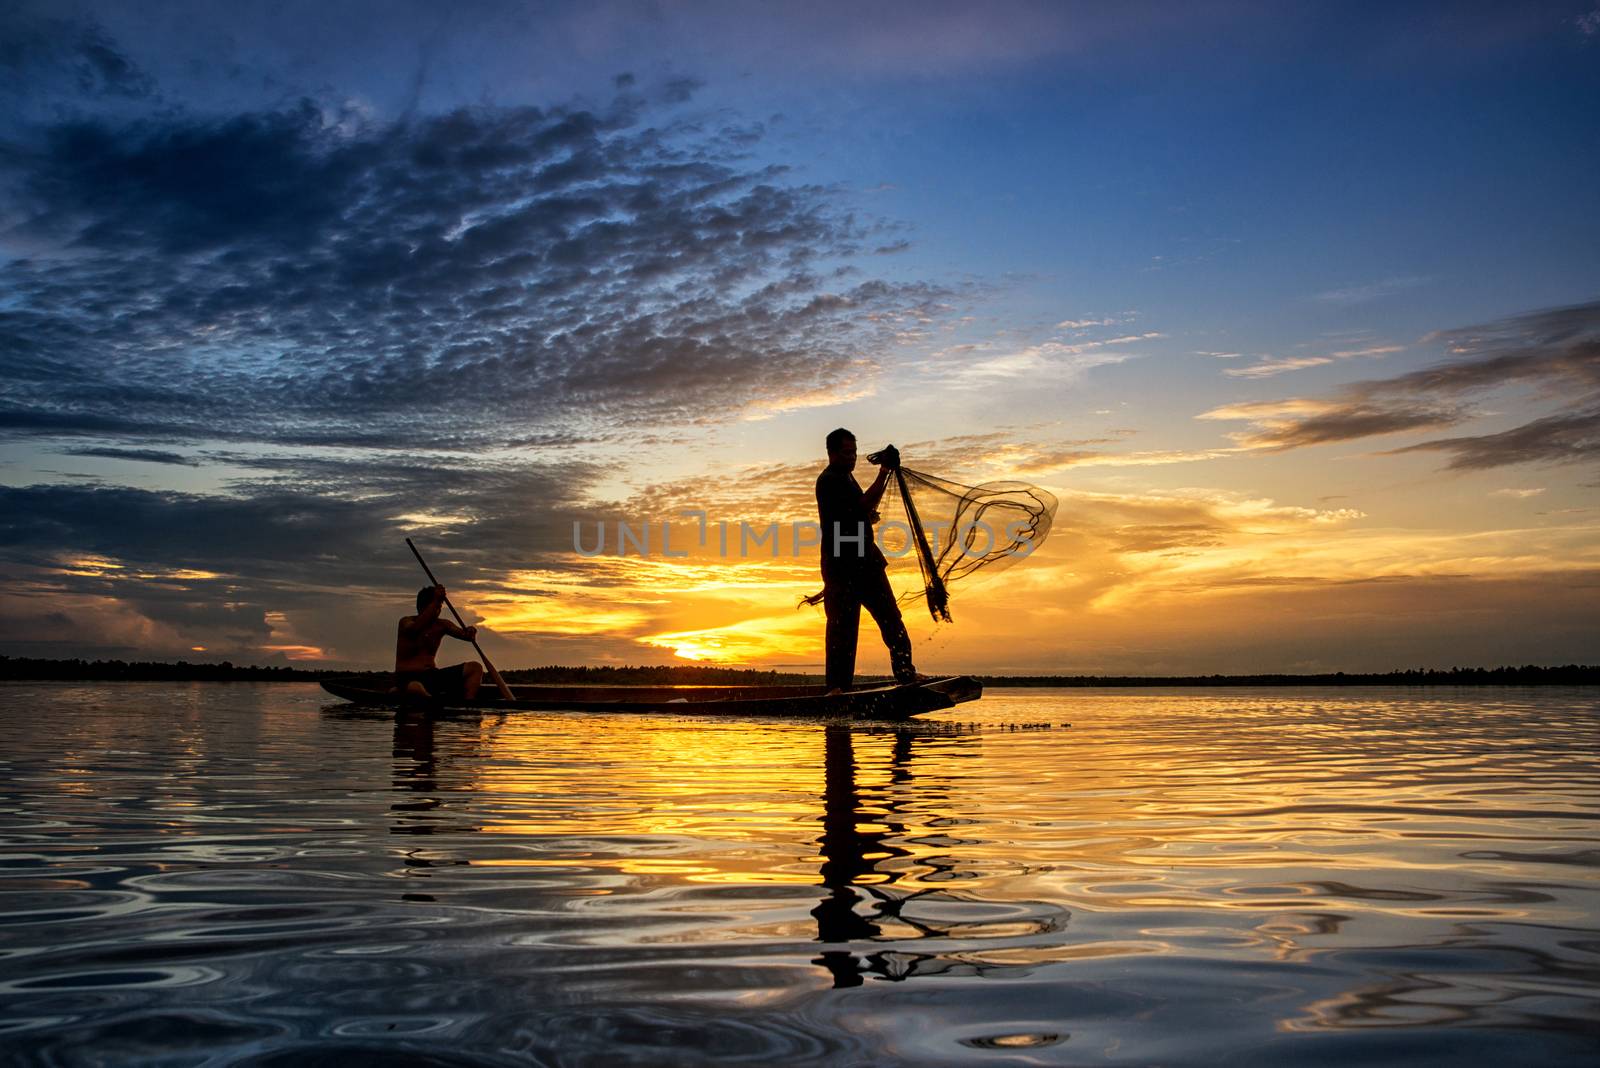 Silhouette of fish lift nets ,Wanonniwat ,Sakon Nakhon, Thailand by chanwity